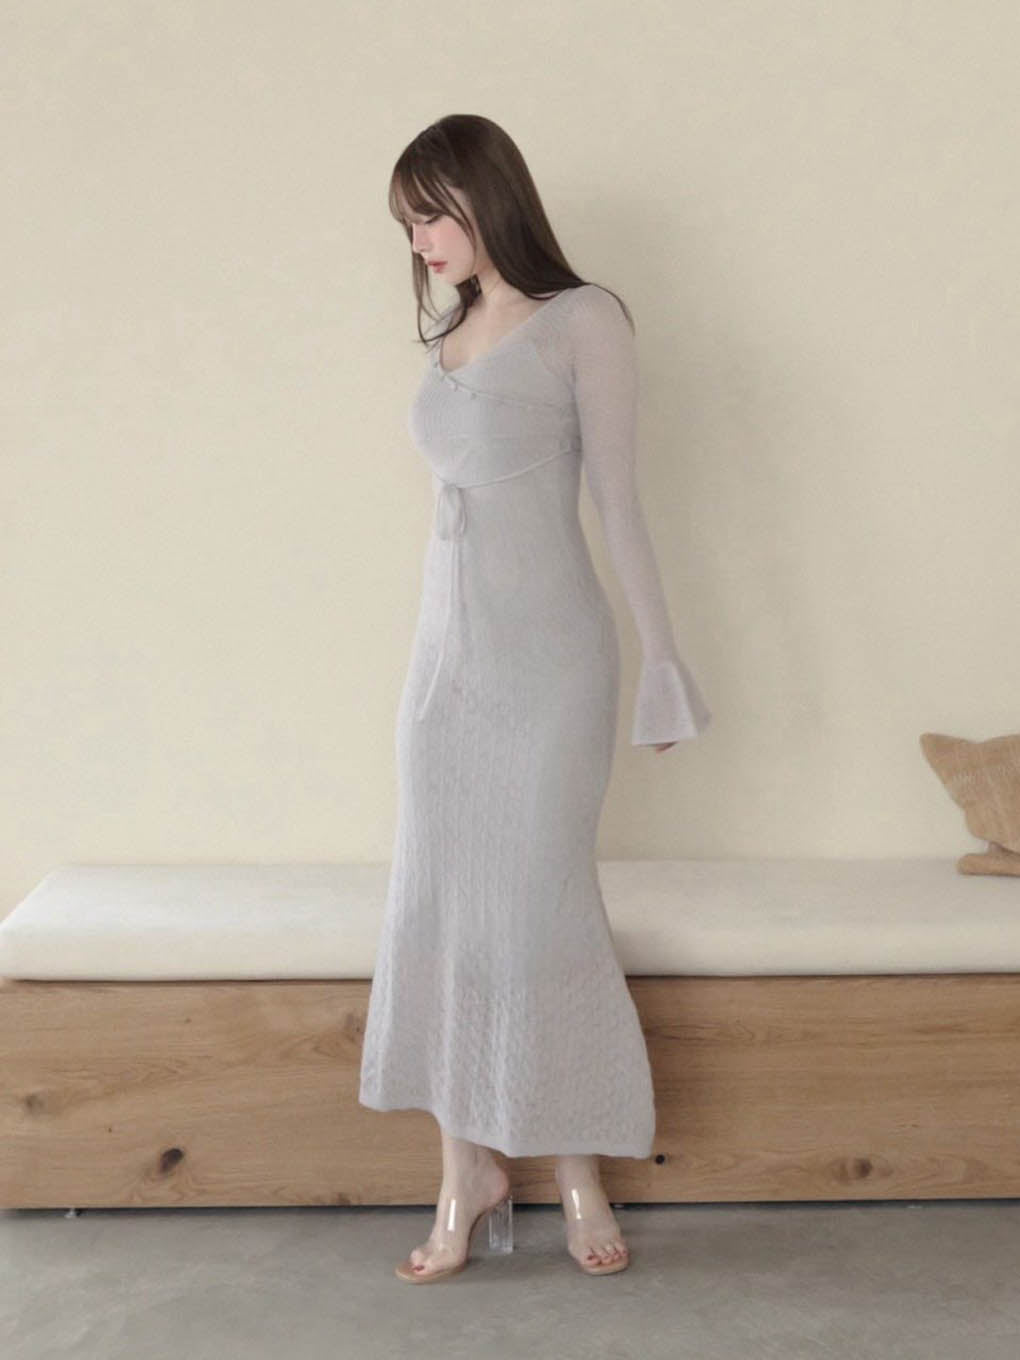 andmary Bella seethrough knit dress全体のお写真アップできませんか